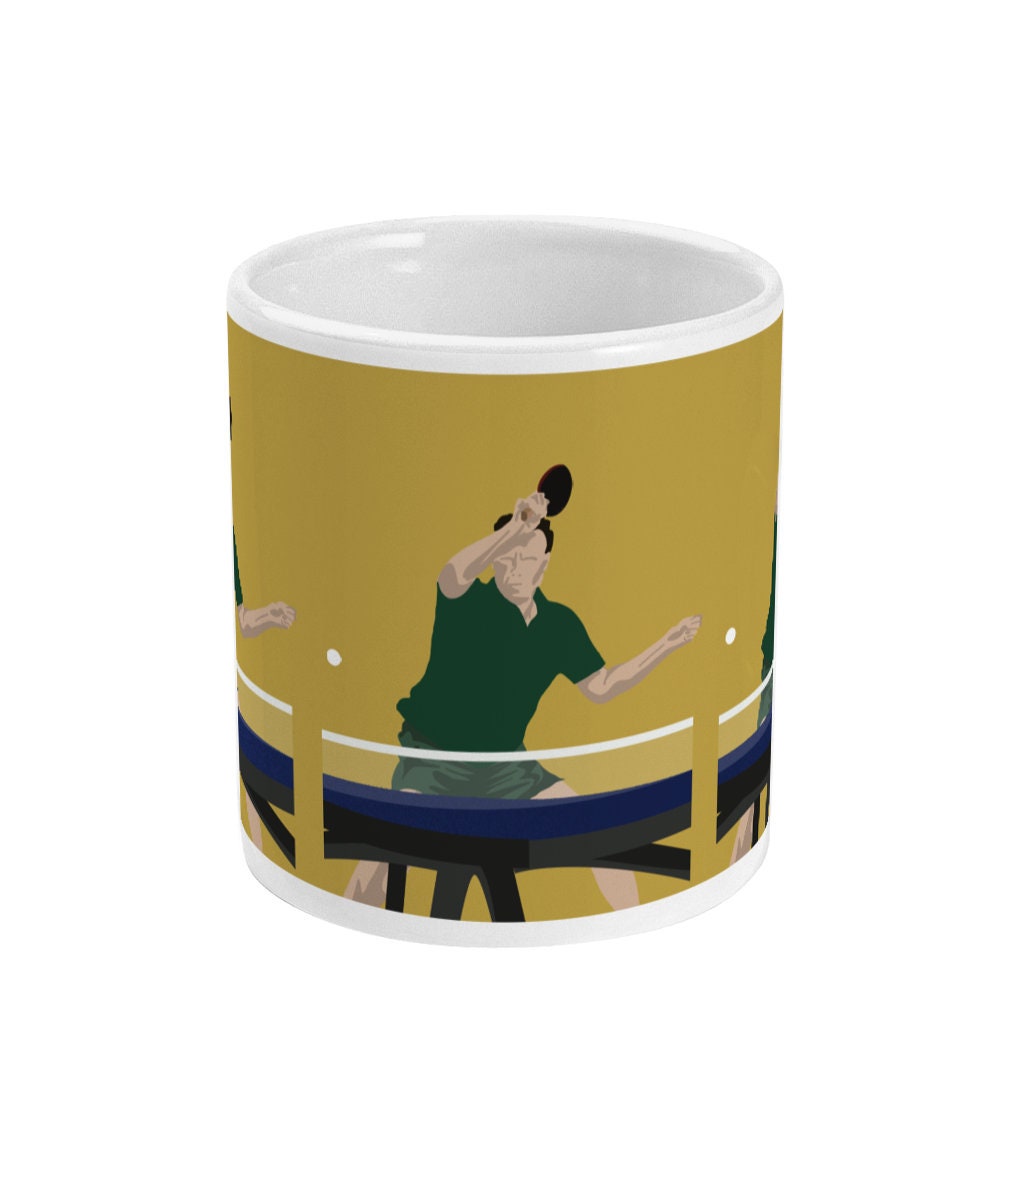 Ping Pong cup or mug "The table tennis player"